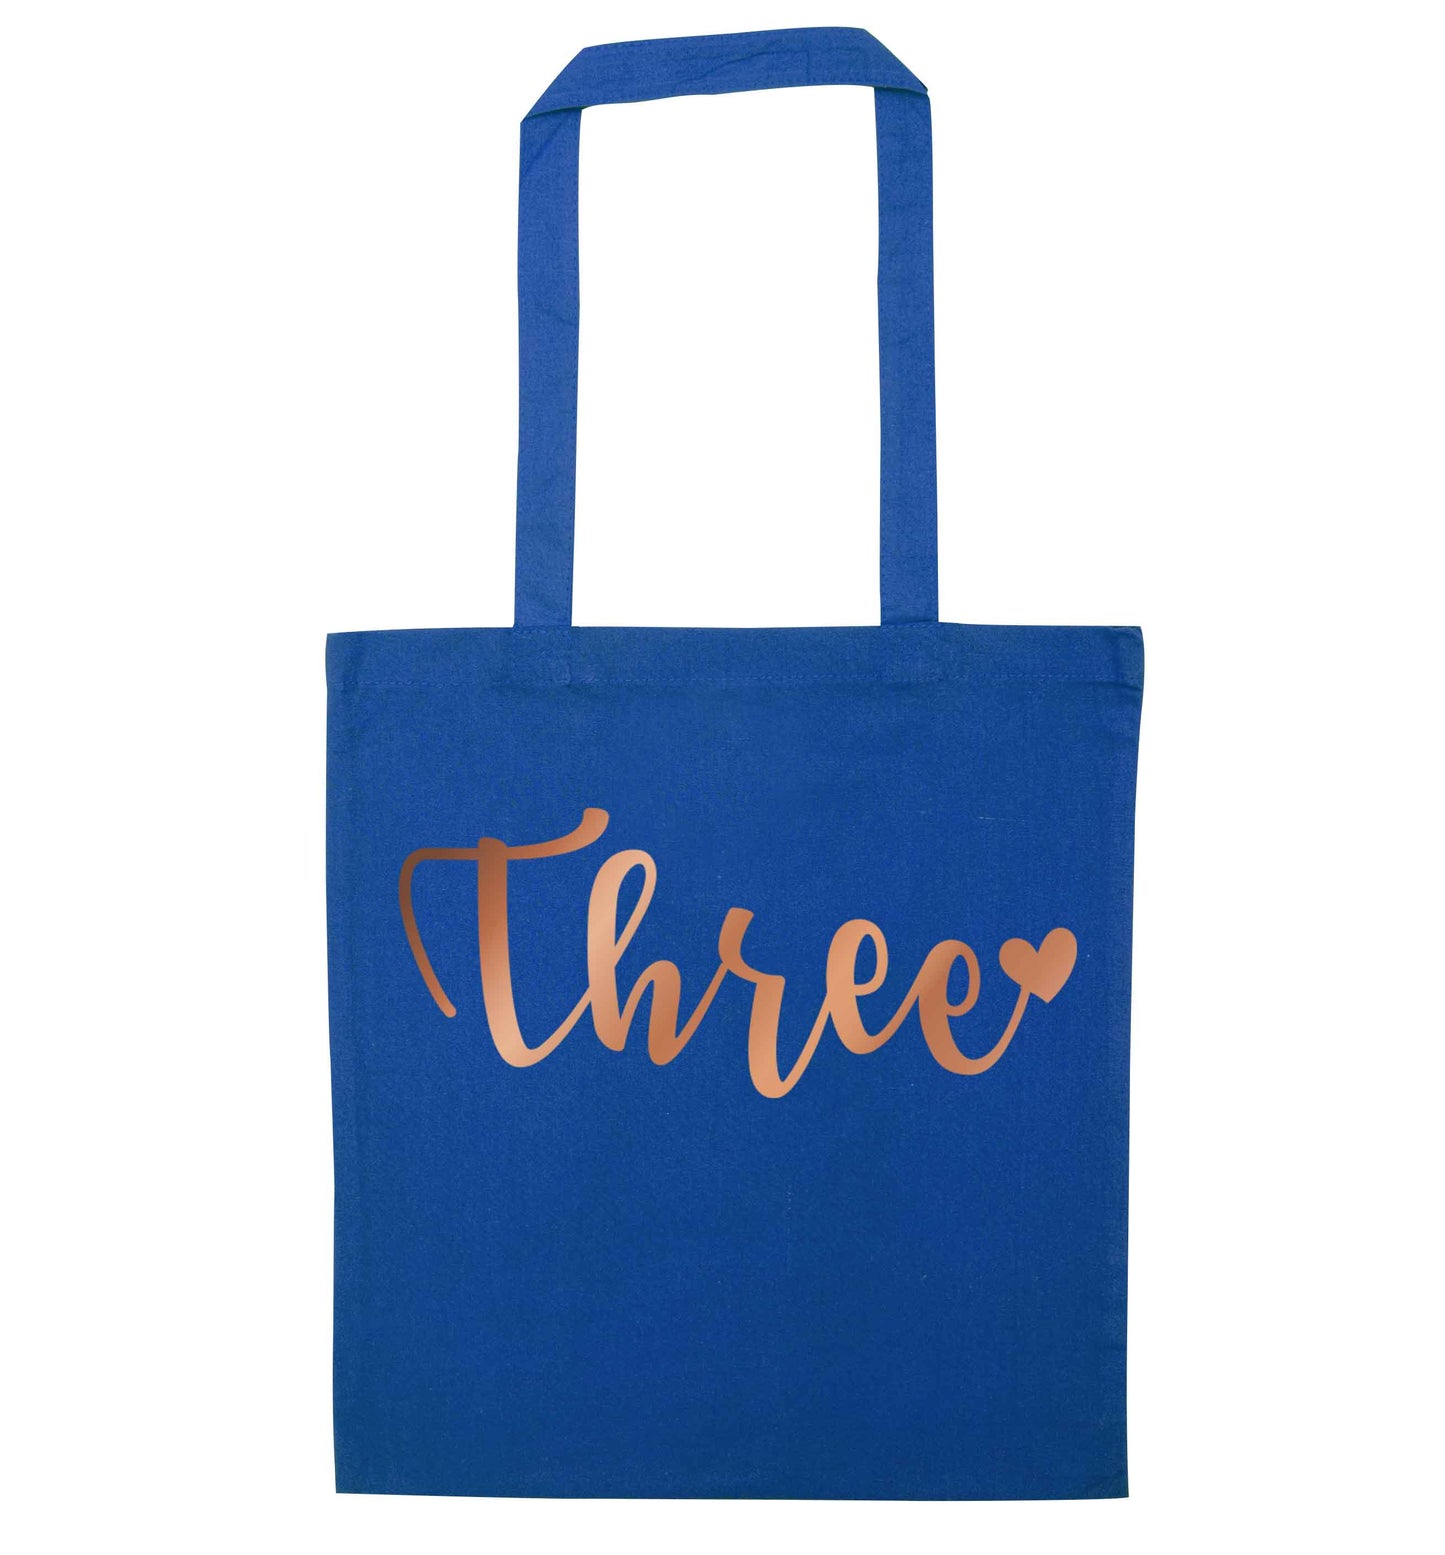 Three rose gold blue tote bag